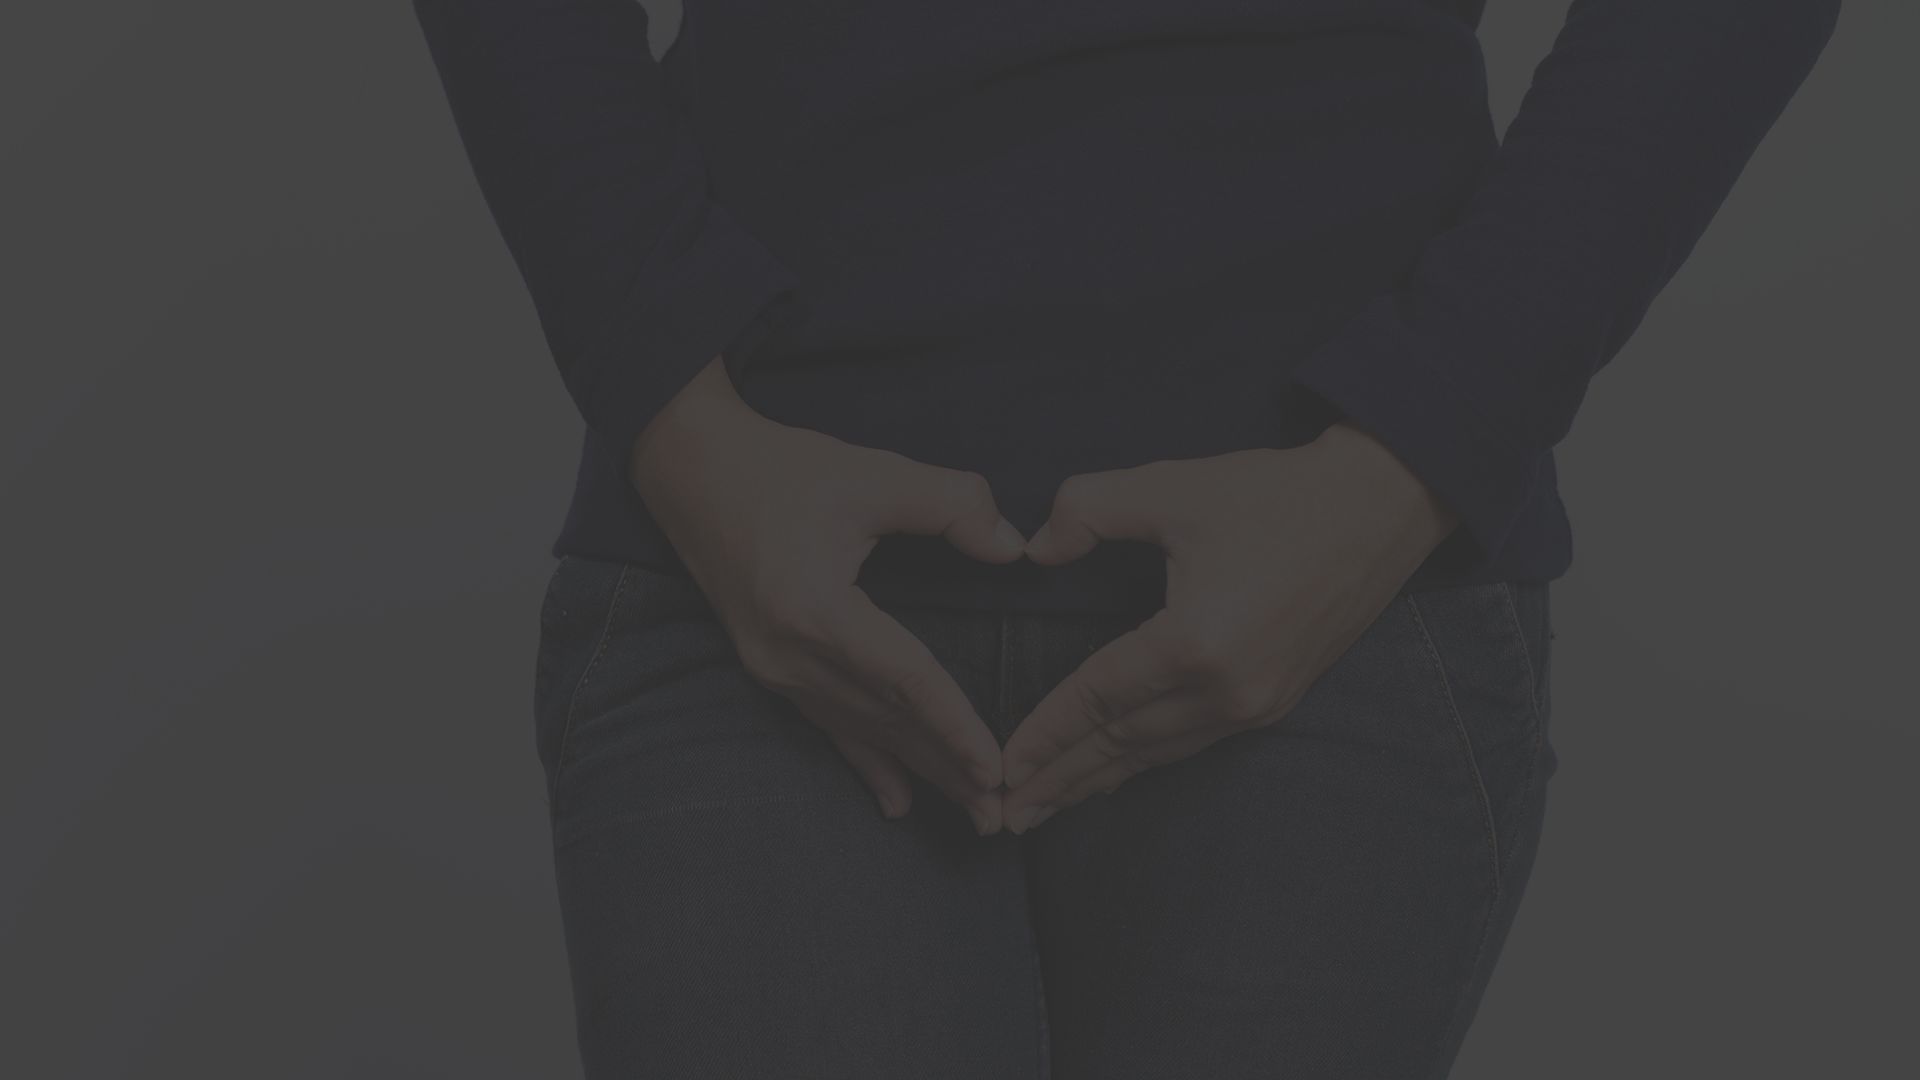 10 Sneaky Reasons Your Vagina S So Itchy Women S Health Sharecare